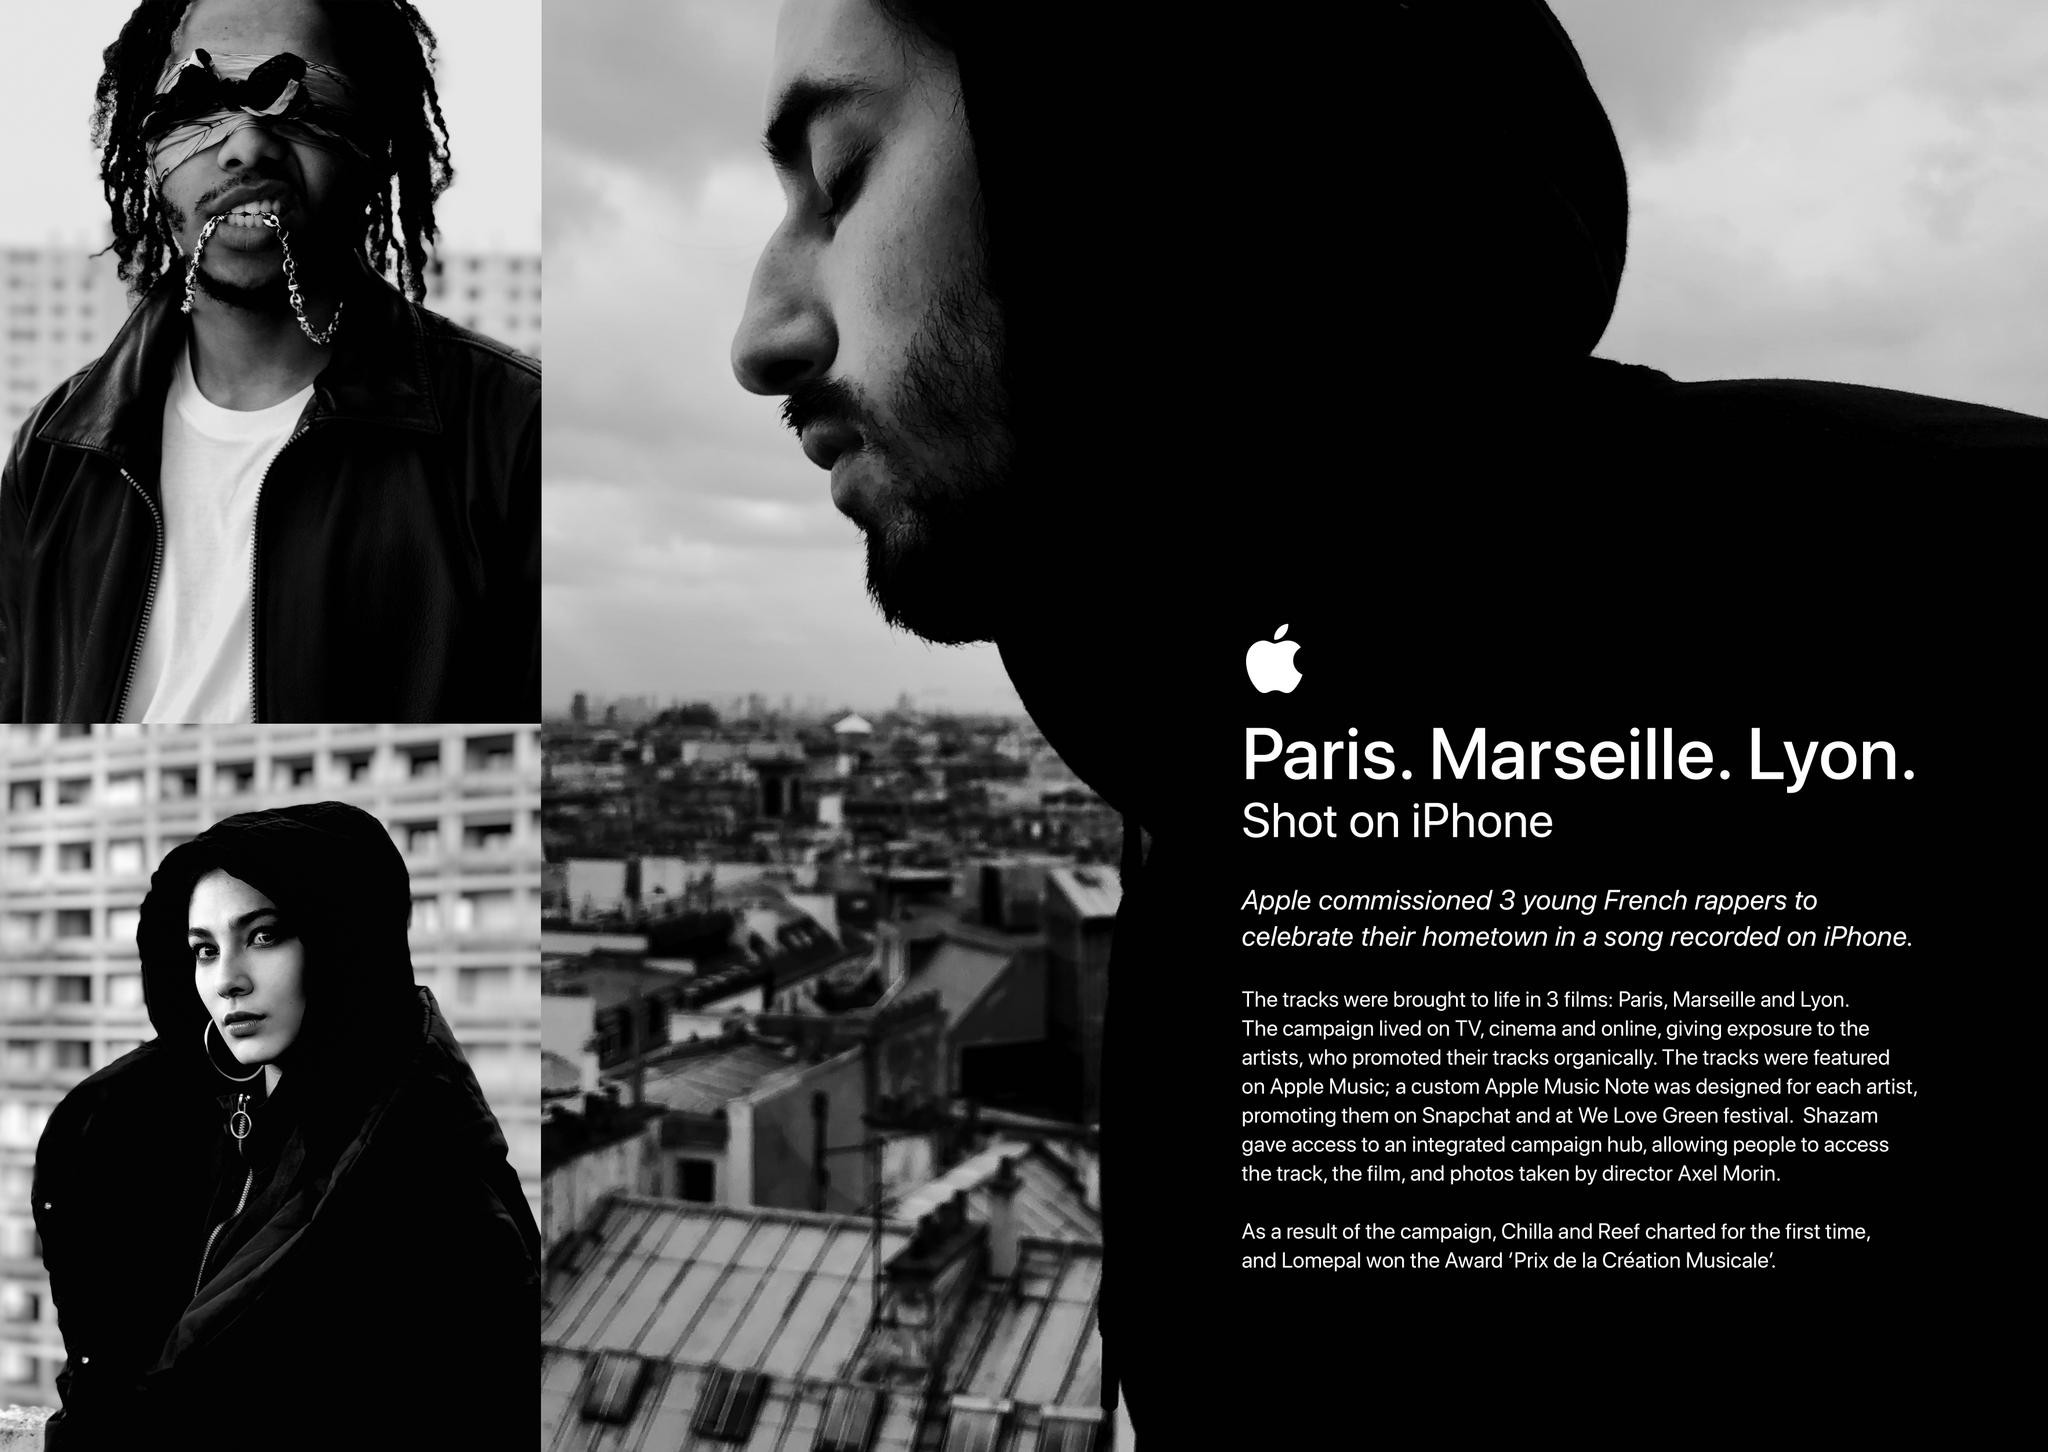 Shot on iPhone — Marseille. Lyon. Paris.